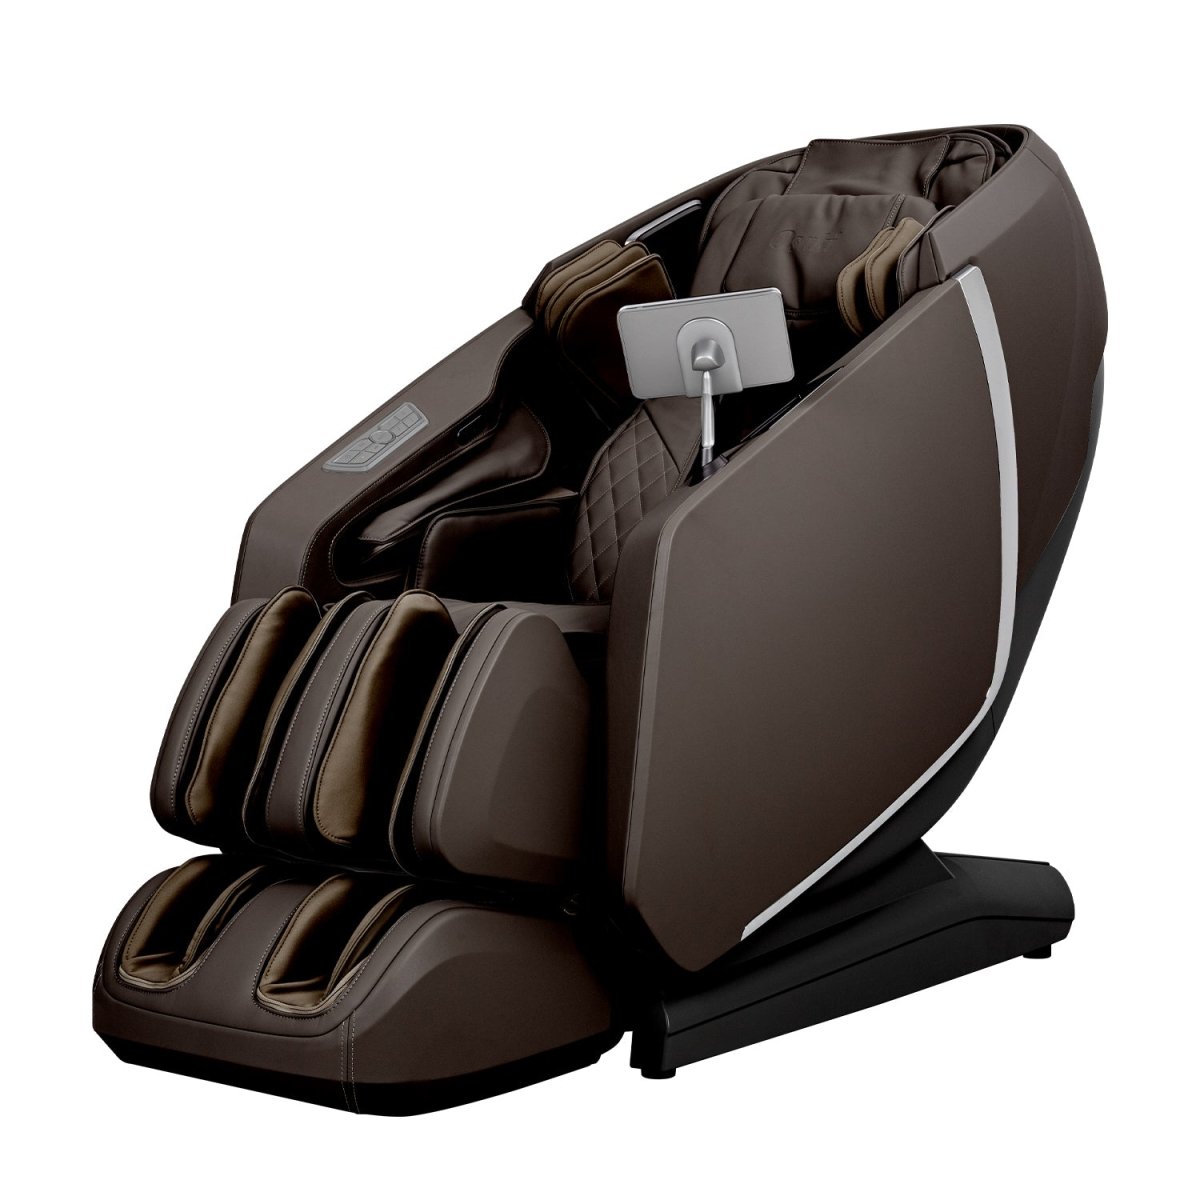 OsakiOsaki OS-PRO Highpointe 4D Massage ChairDark BrownMassage Chair Heaven